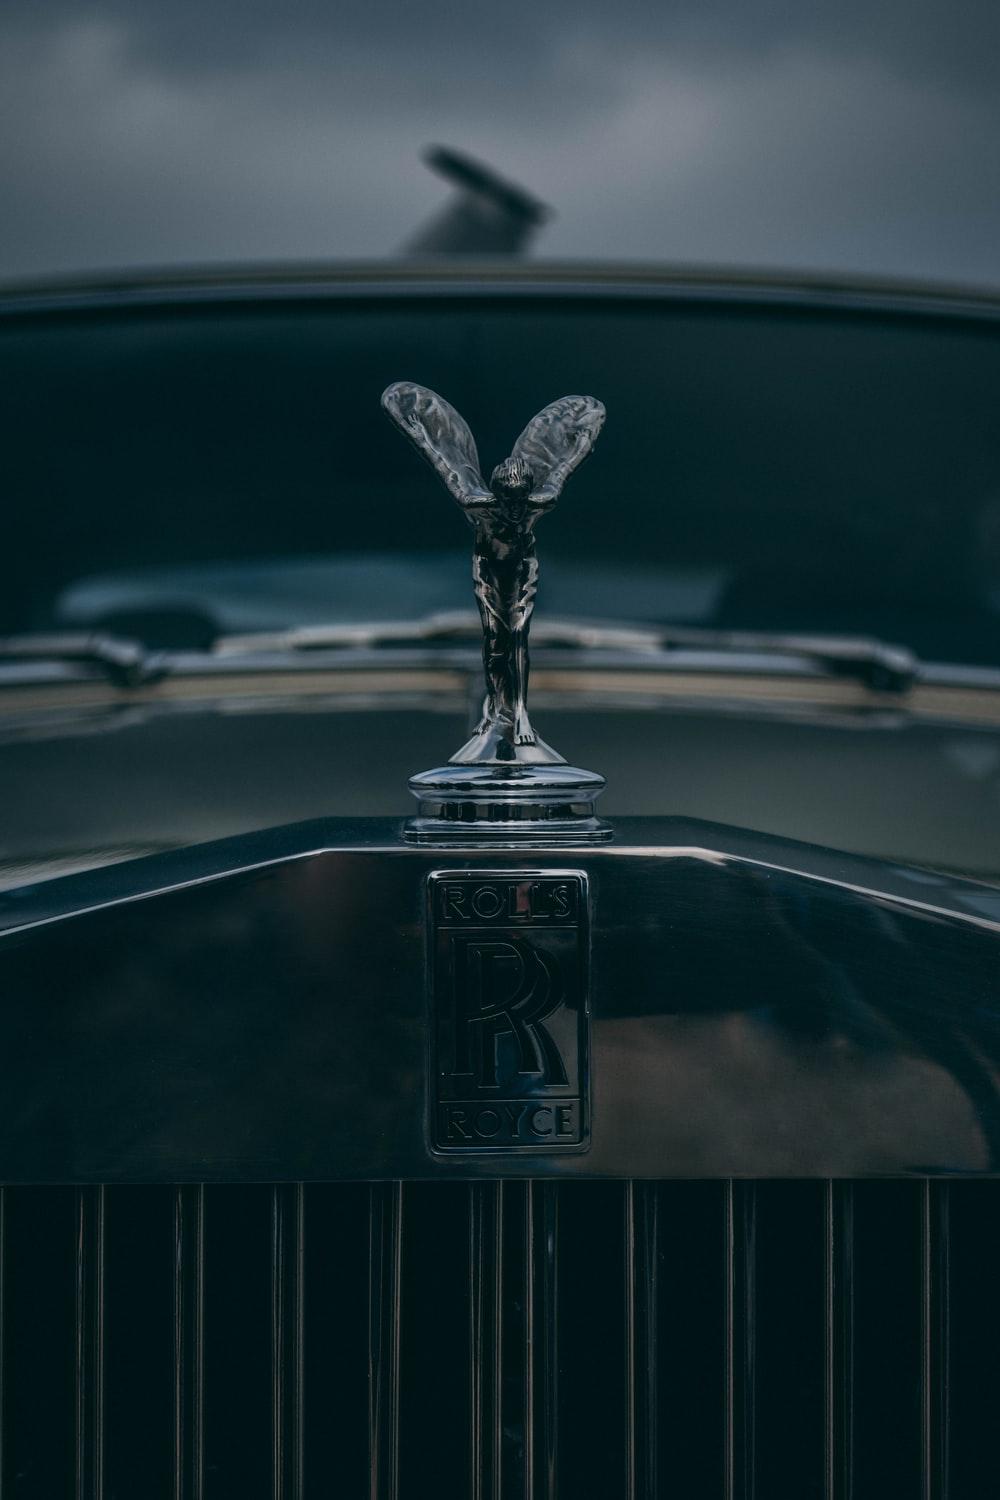 Rolls Royce Phantom Picture. Download Free Image